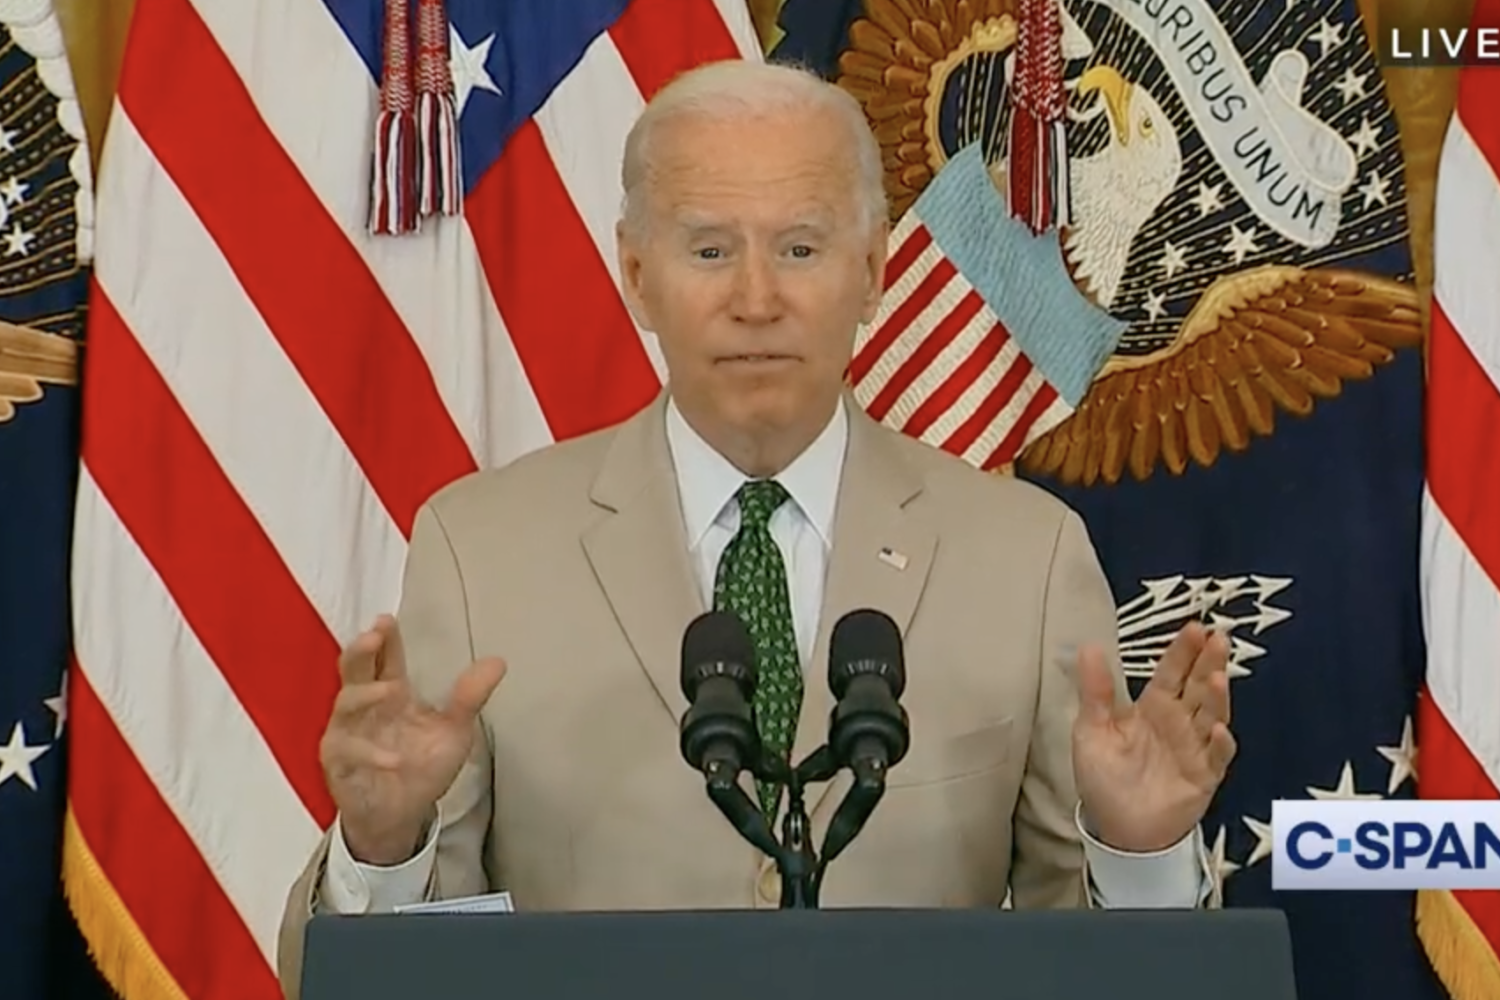 Screenshot of Joe Biden press conference on C-Span.